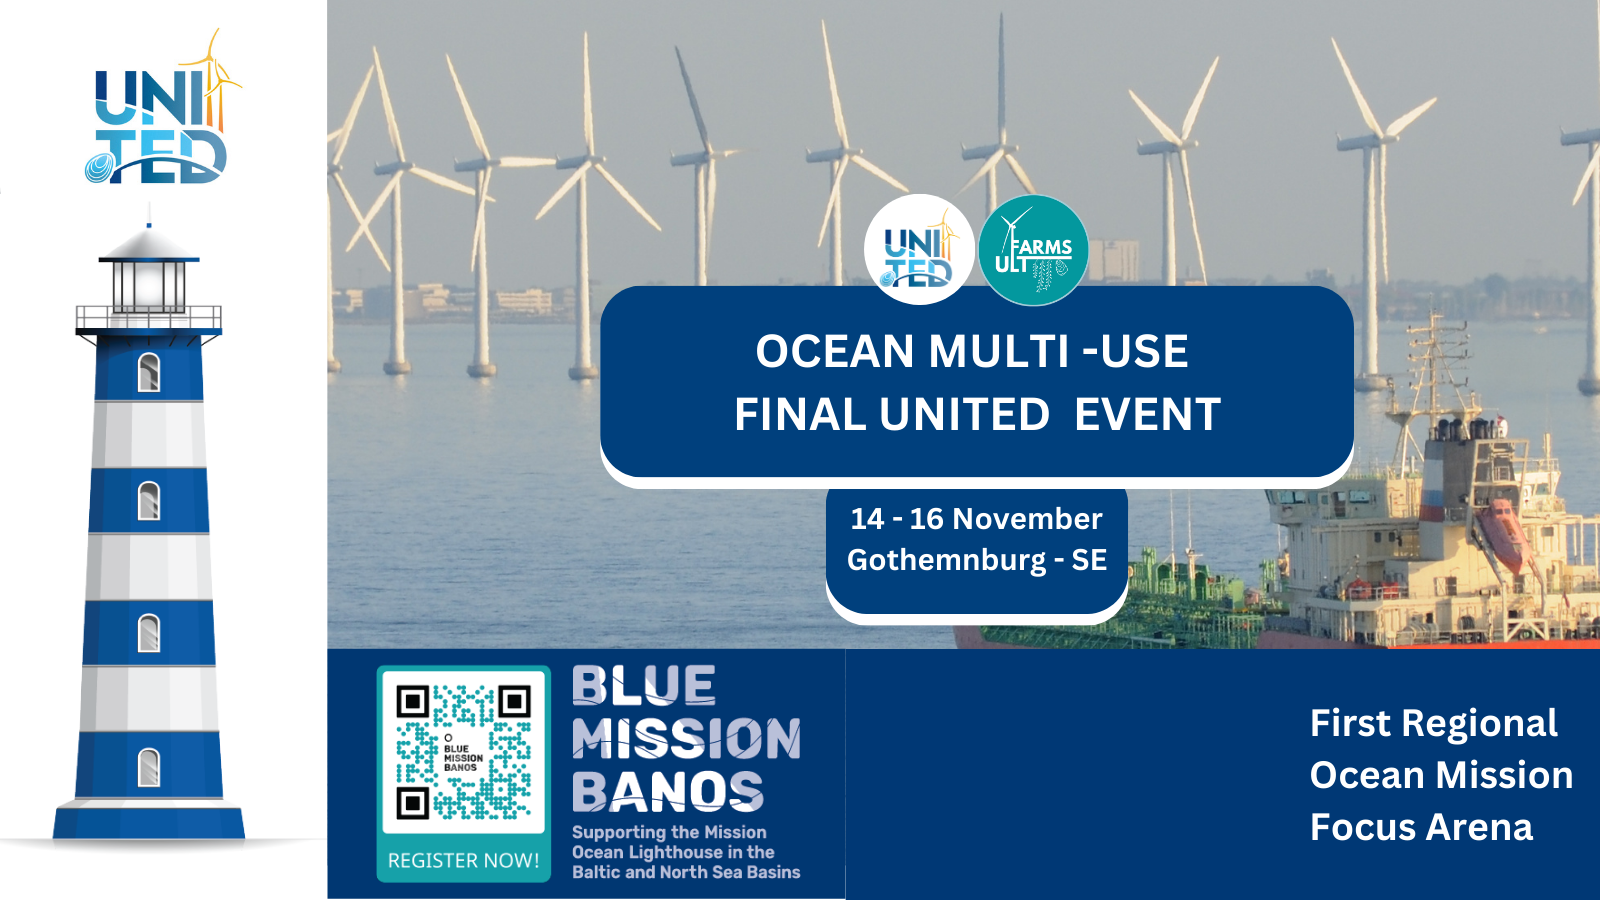 OCEAN MULTI-USE UNITED FINAL EVENT